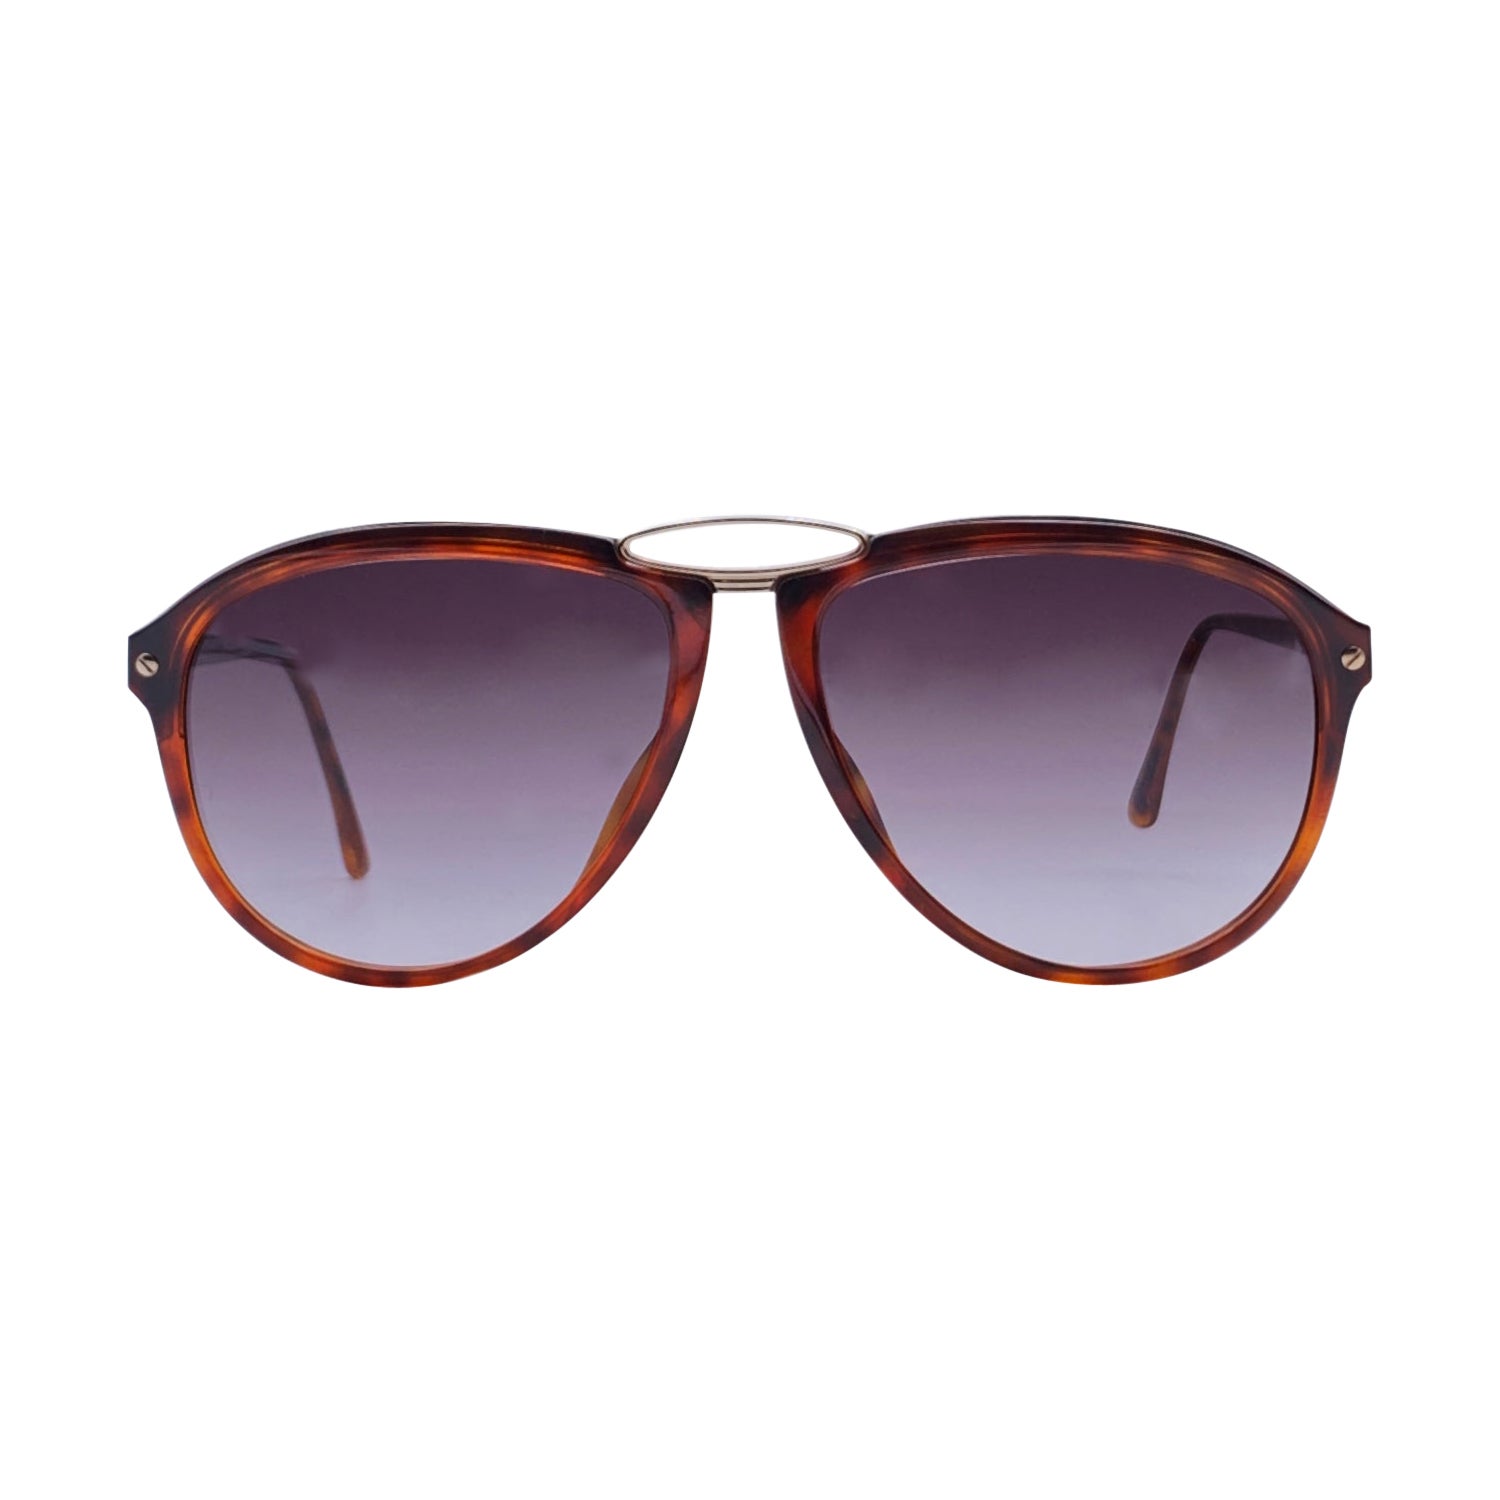 Christian Dior Vintage Brown Sunglasses Mod. 2523 61-16 140 mm